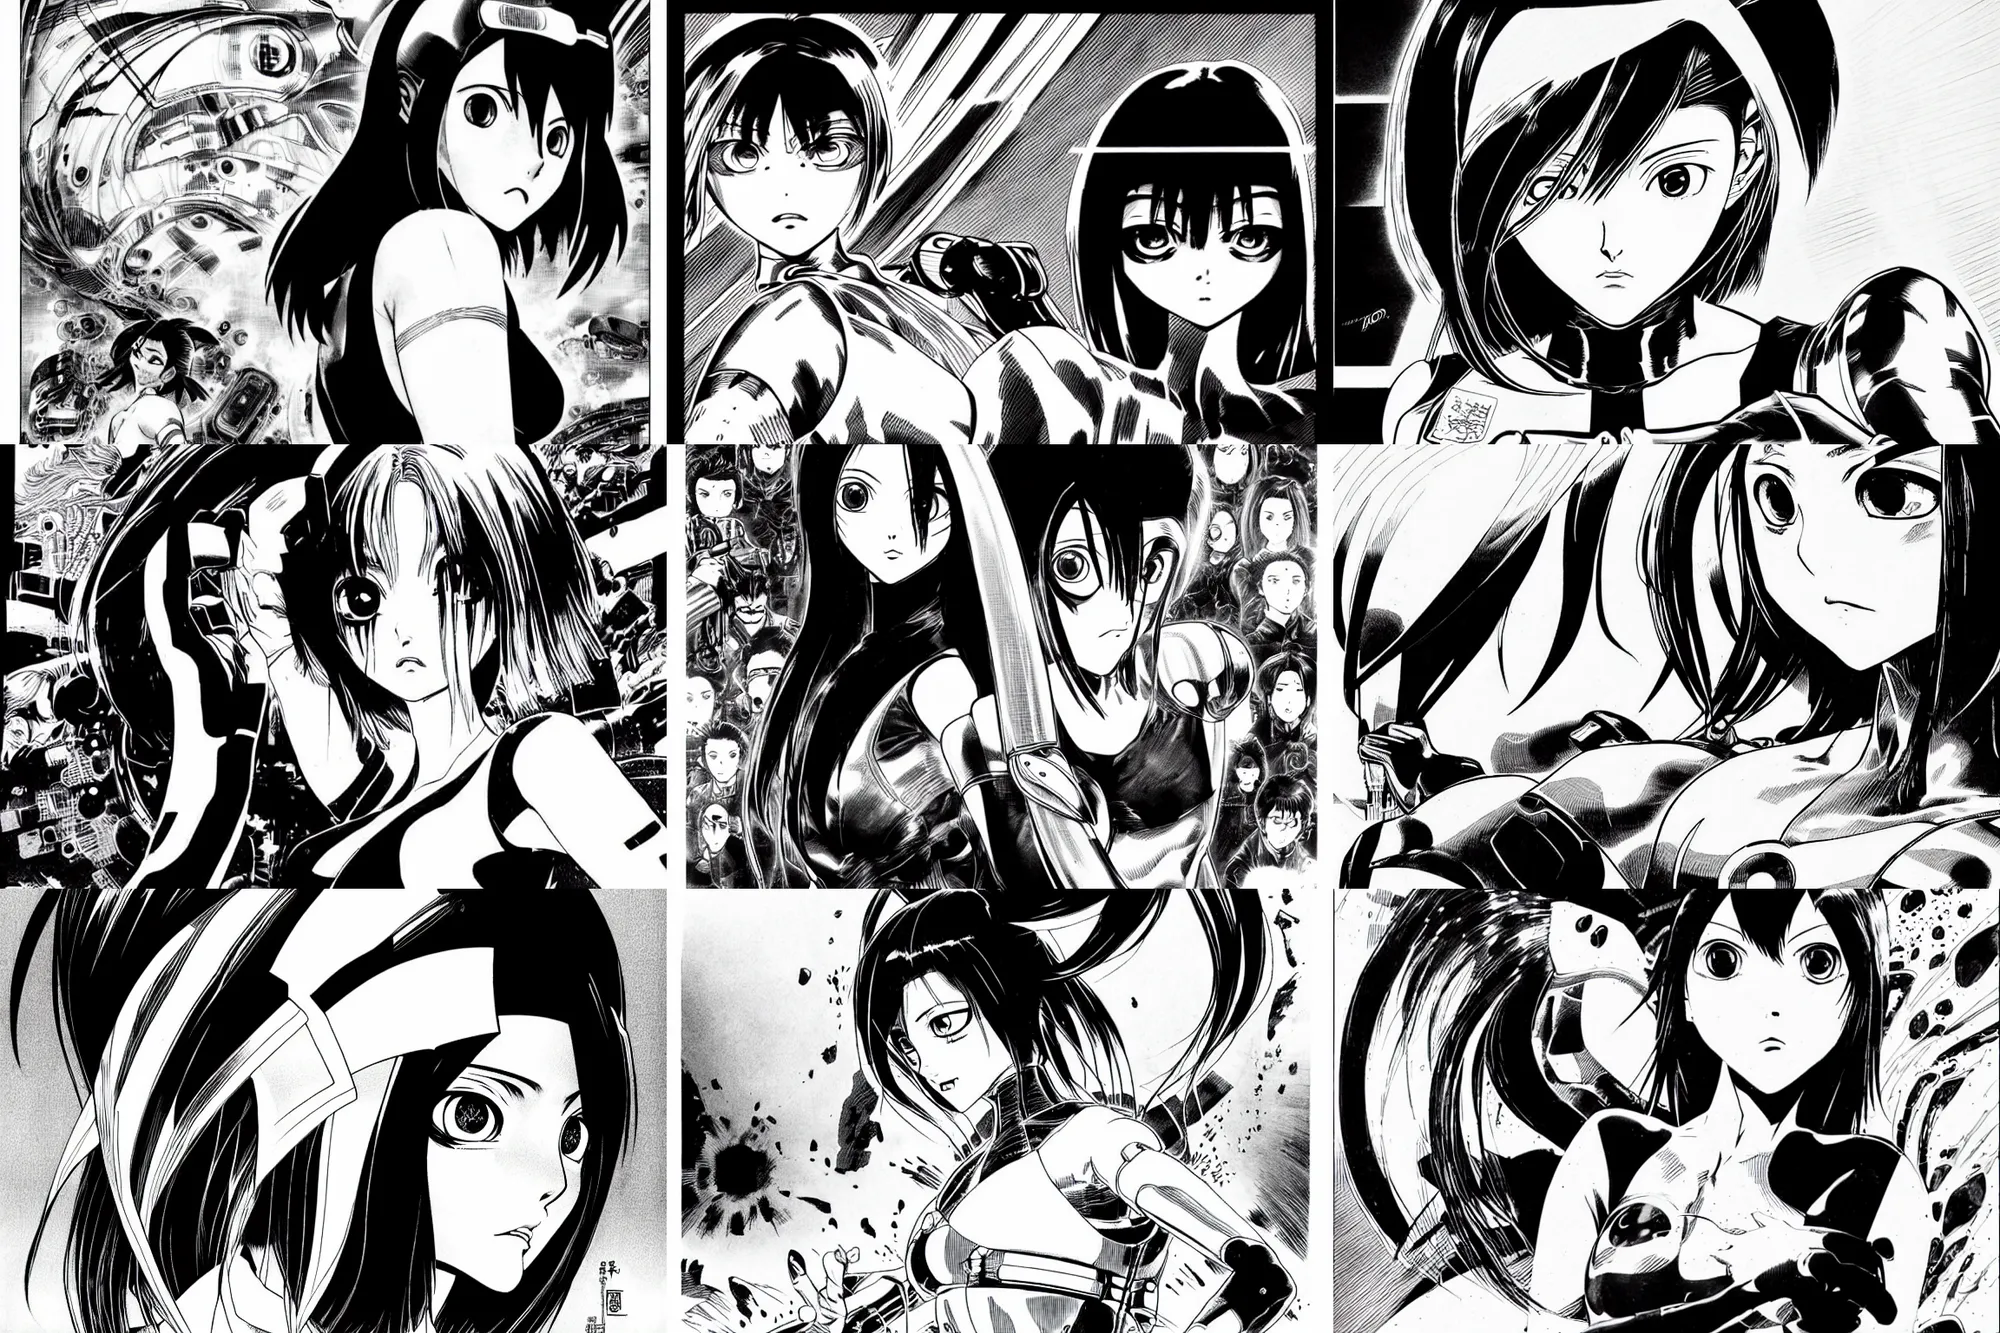 Prompt: alita by yukito kishiro. black and white manga